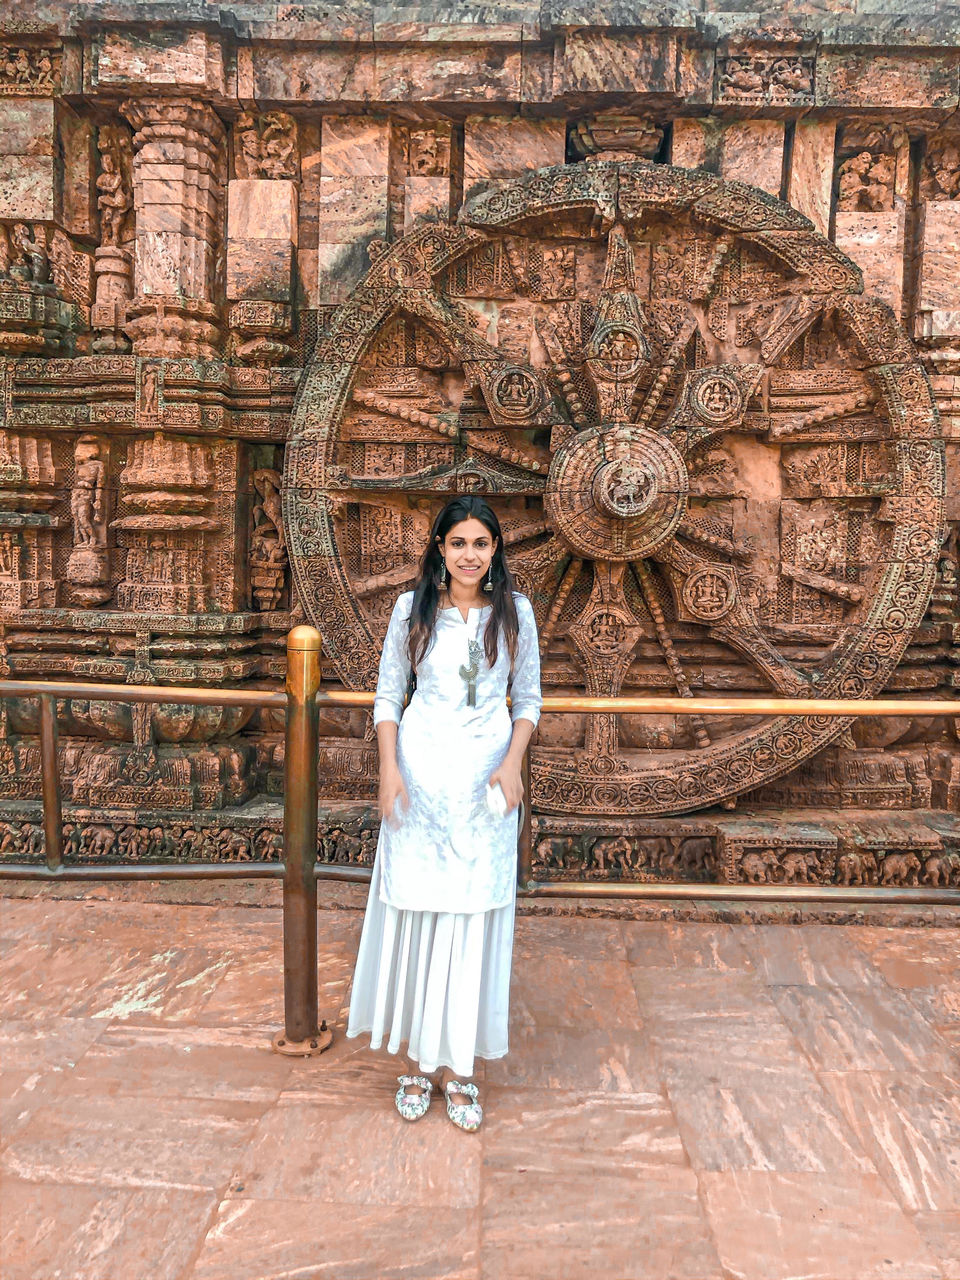 Photo of Konark Sun Temple Odisha 2/3 by ApyTravelStories